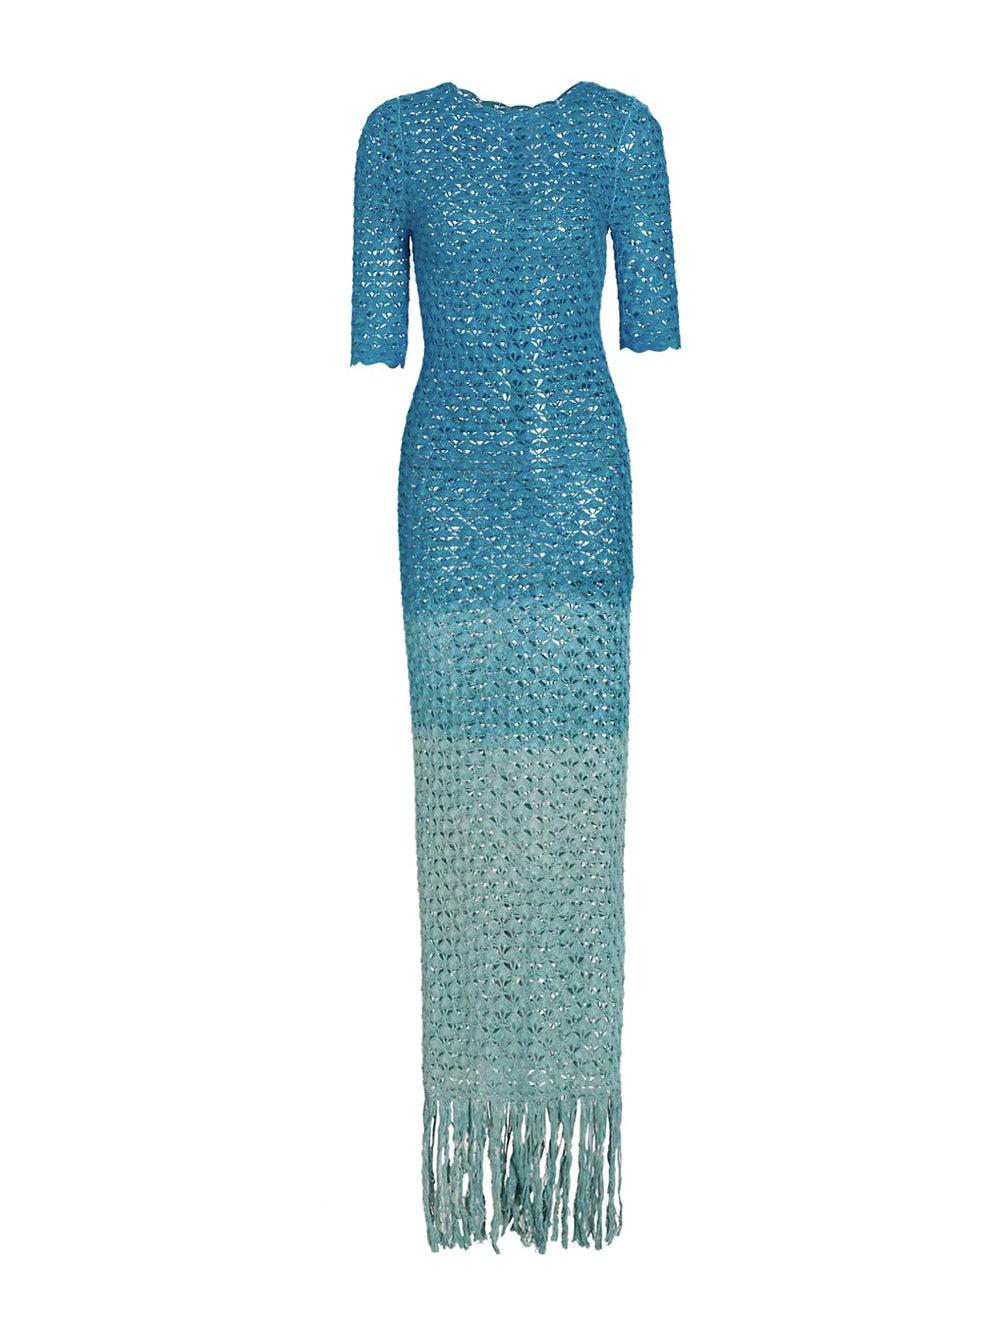 Eugene Taylor Brand Crochet Fringe Dress M / Brown/Blue